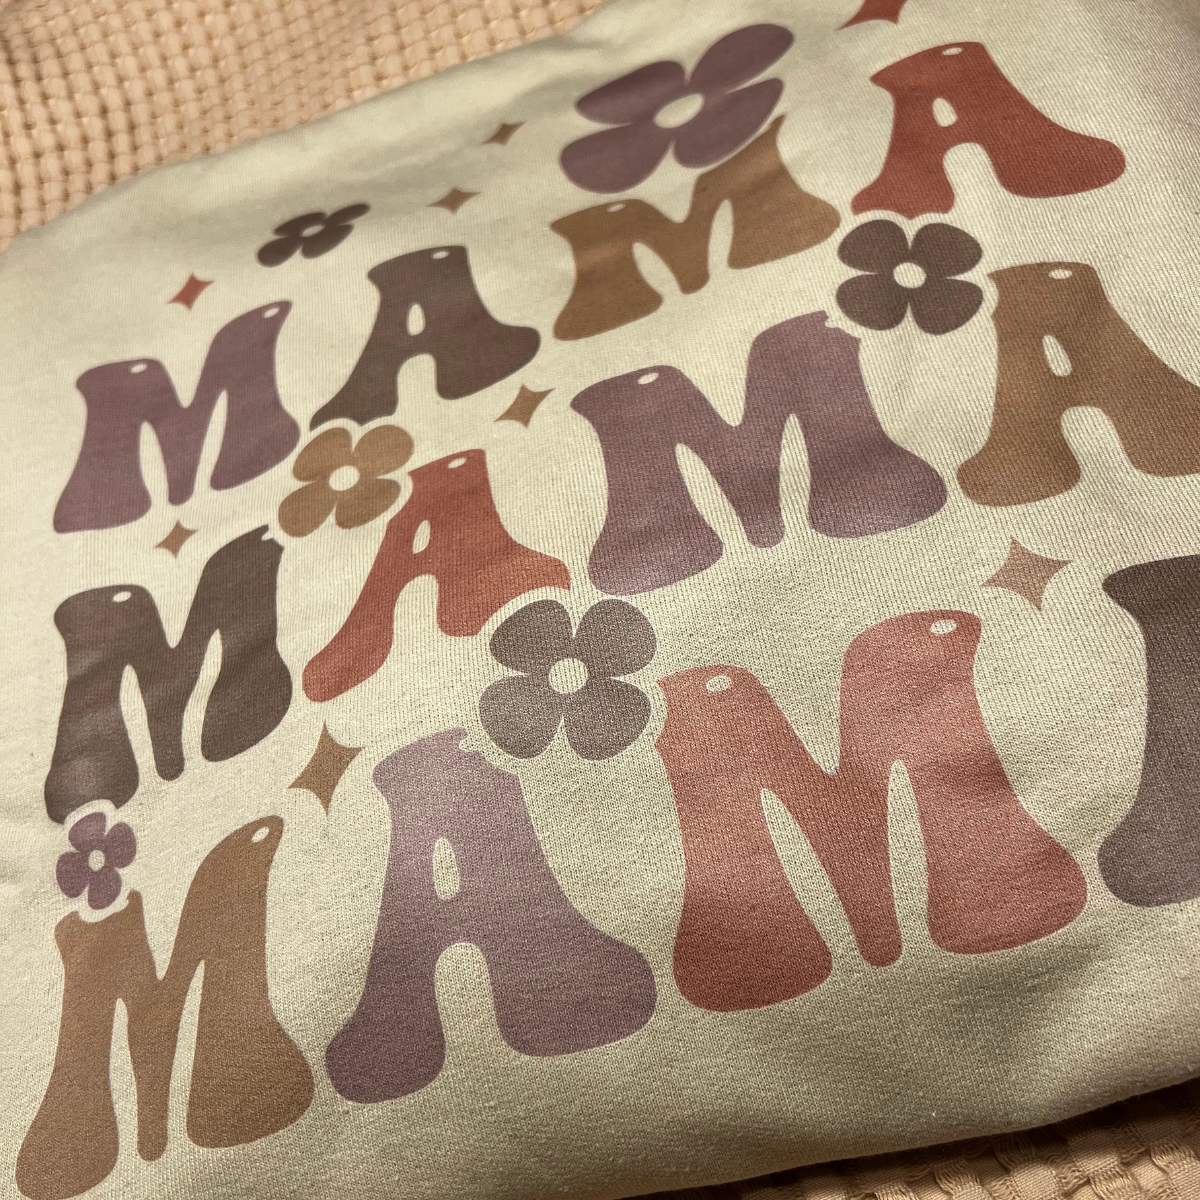 Mama Sweatshirt - Casual, Floral, by Bash, Printed on a Gildan Sweatshirt